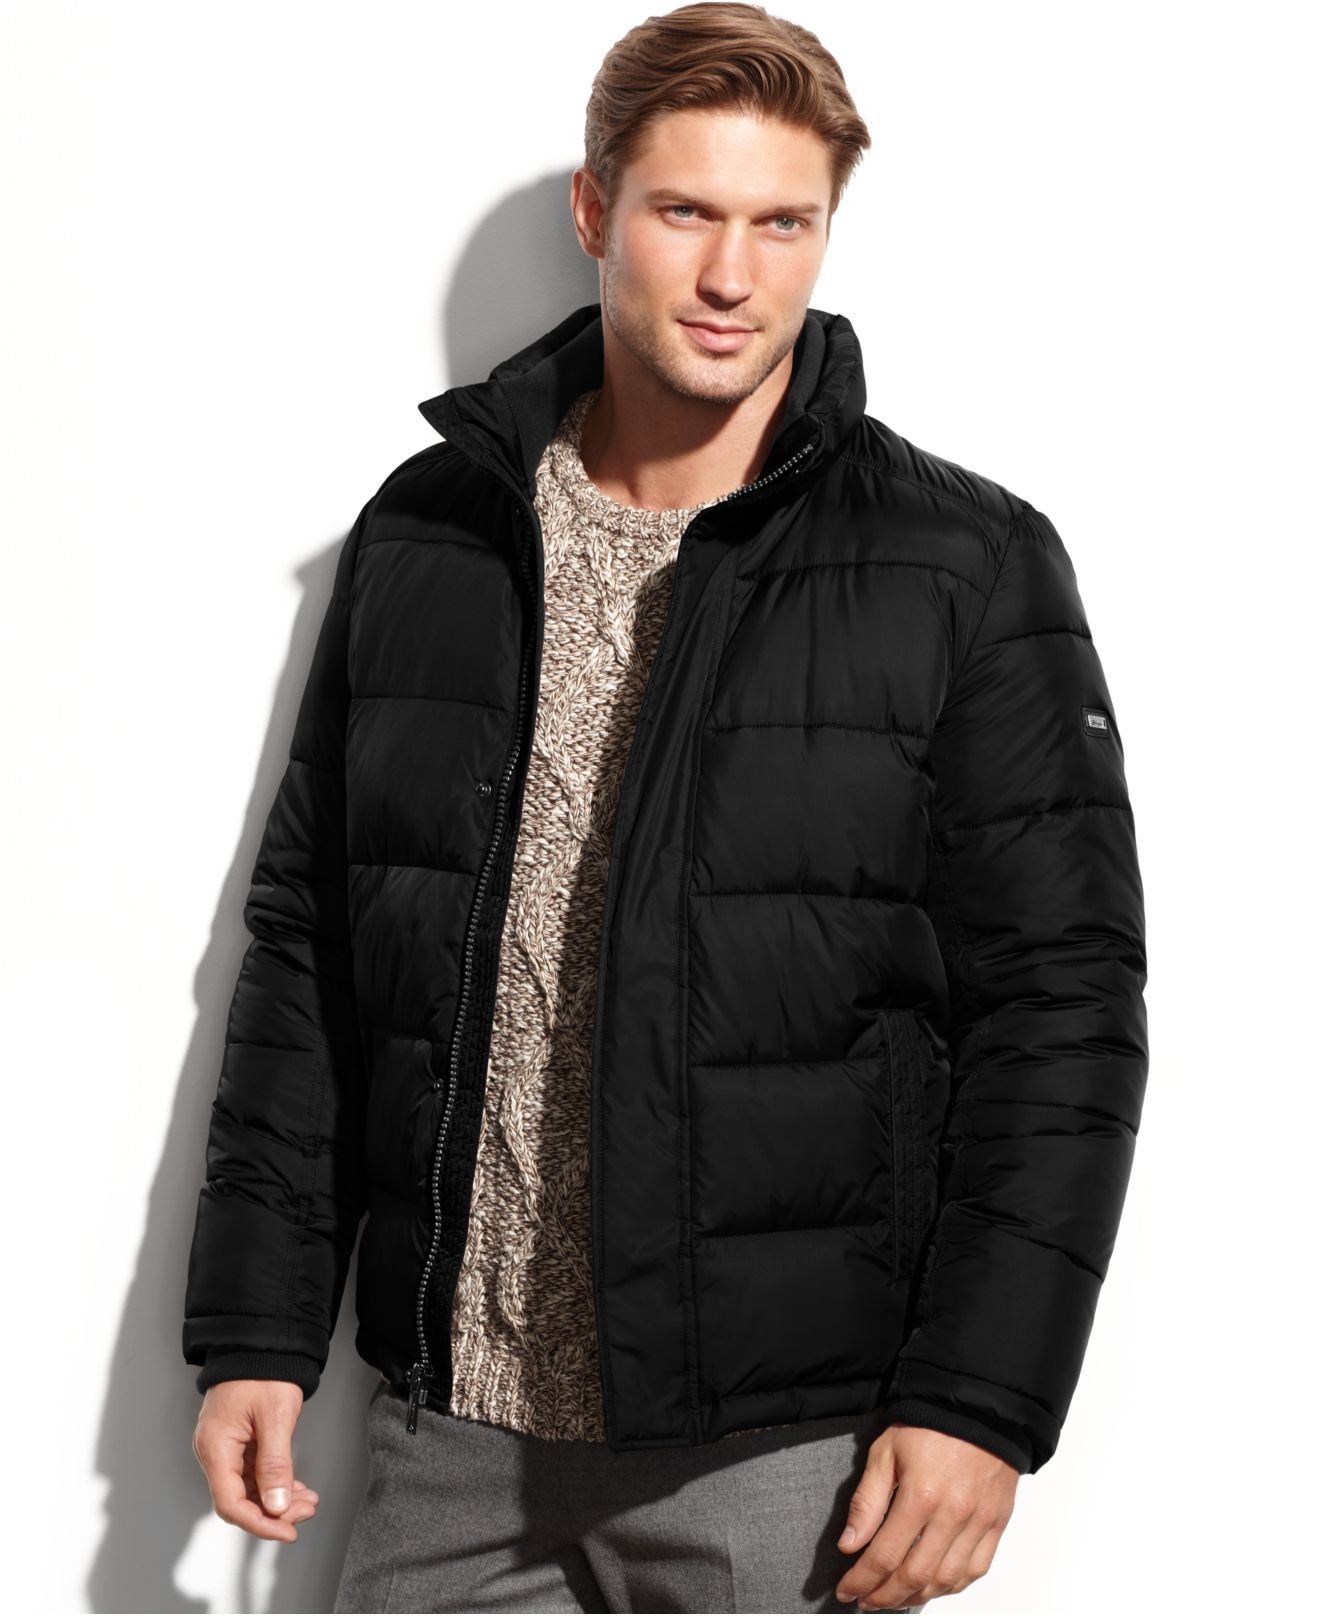 Aliexpress.com : Buy Jacket men casual winter thicken warm